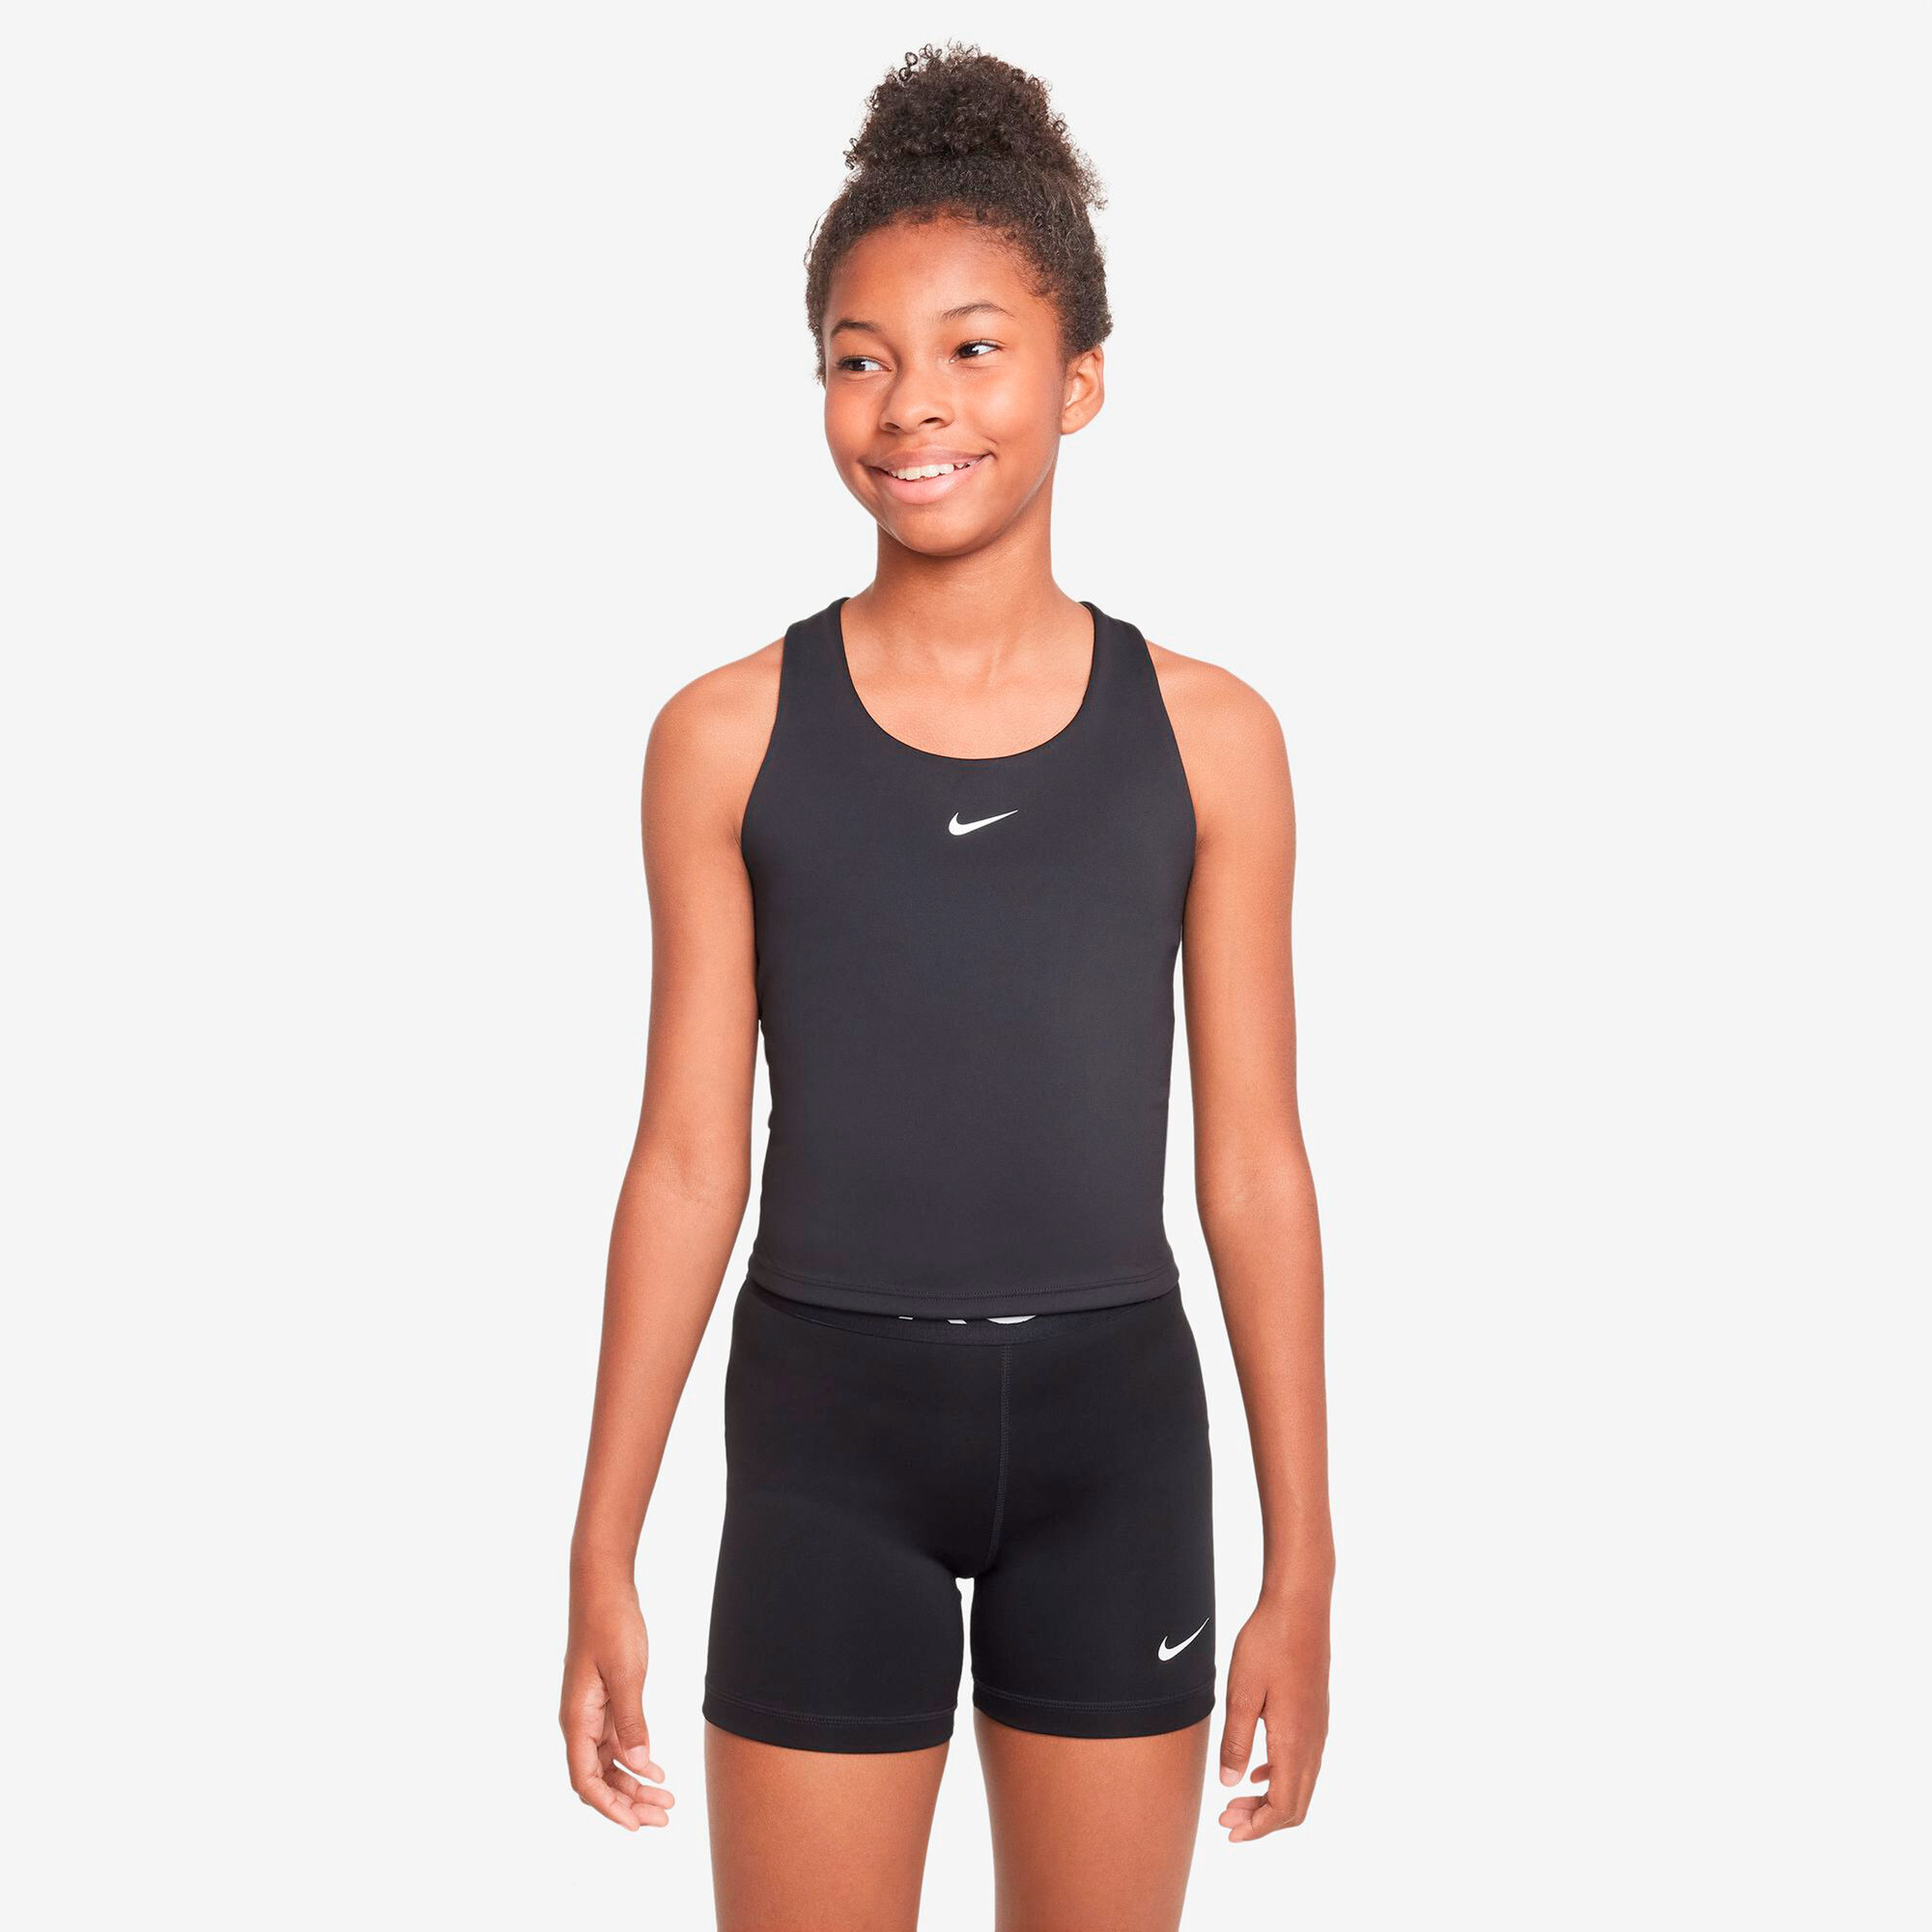 Buy Nike Dri-Fit Swoosh Tank Top Girls Black online